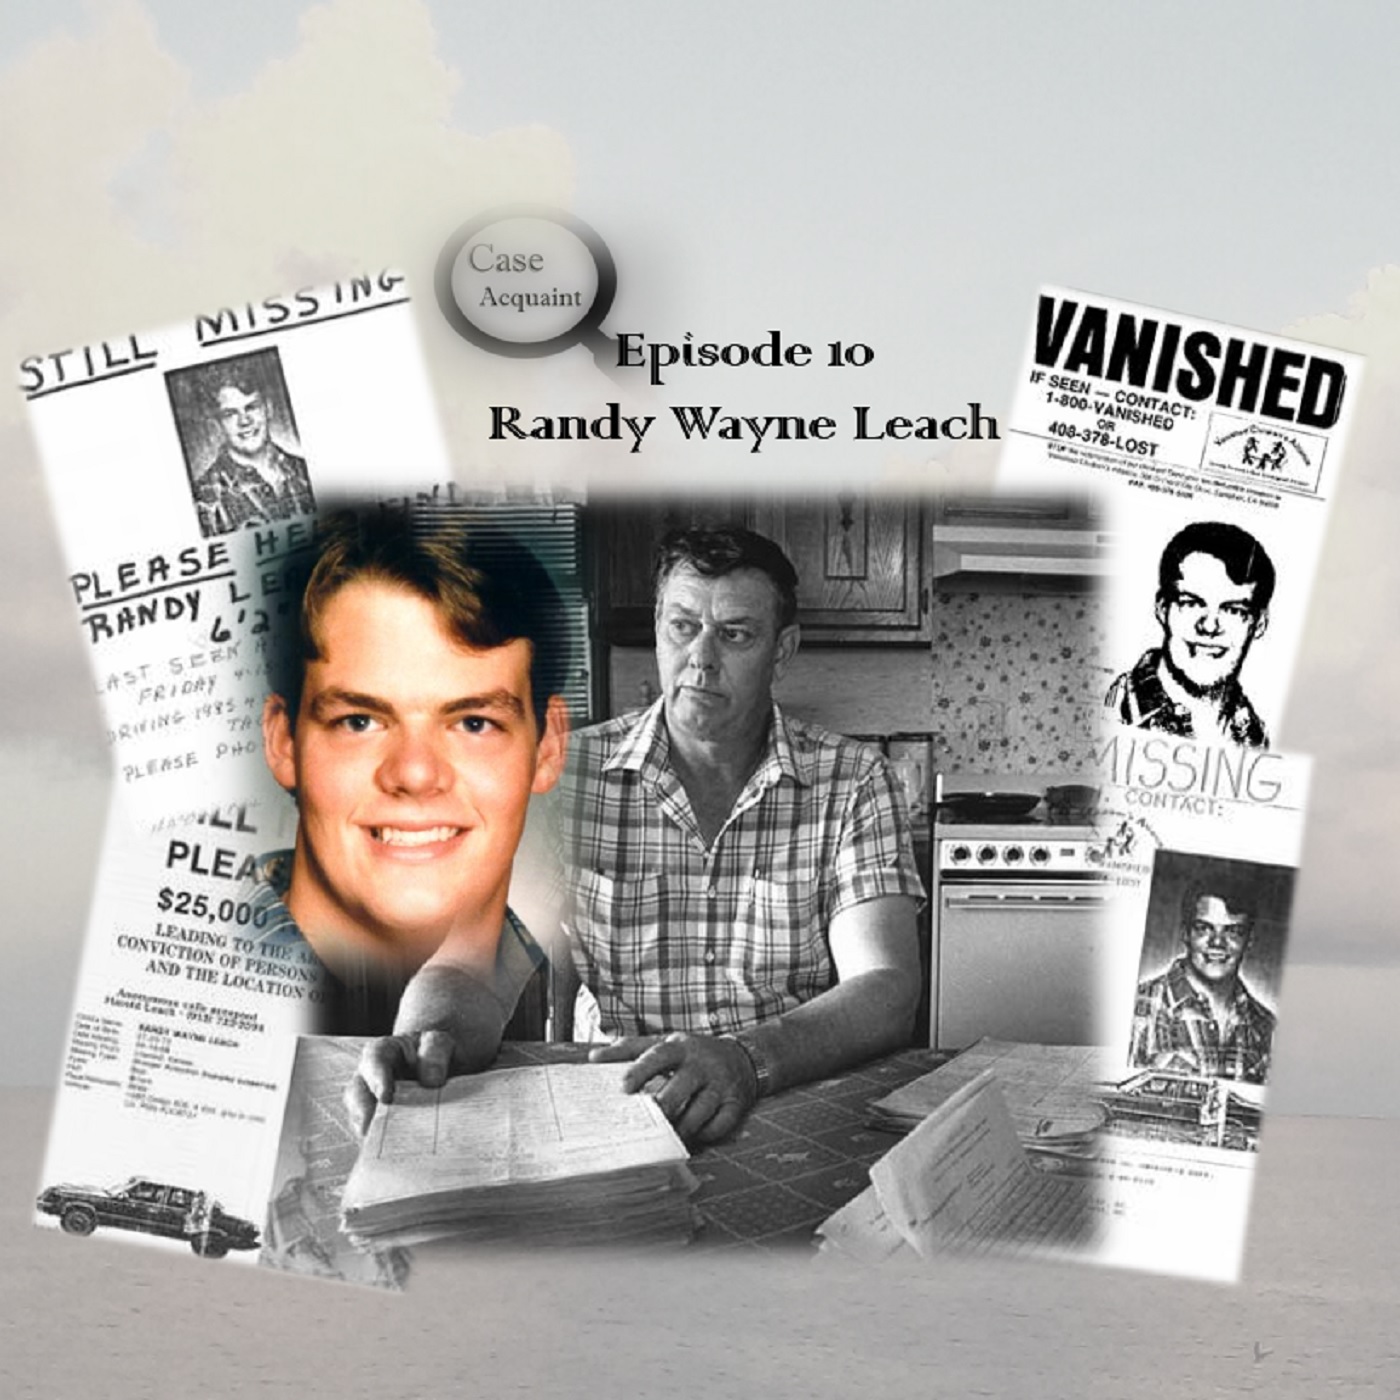 Episode 10 MISSING Randy Wayne Leach